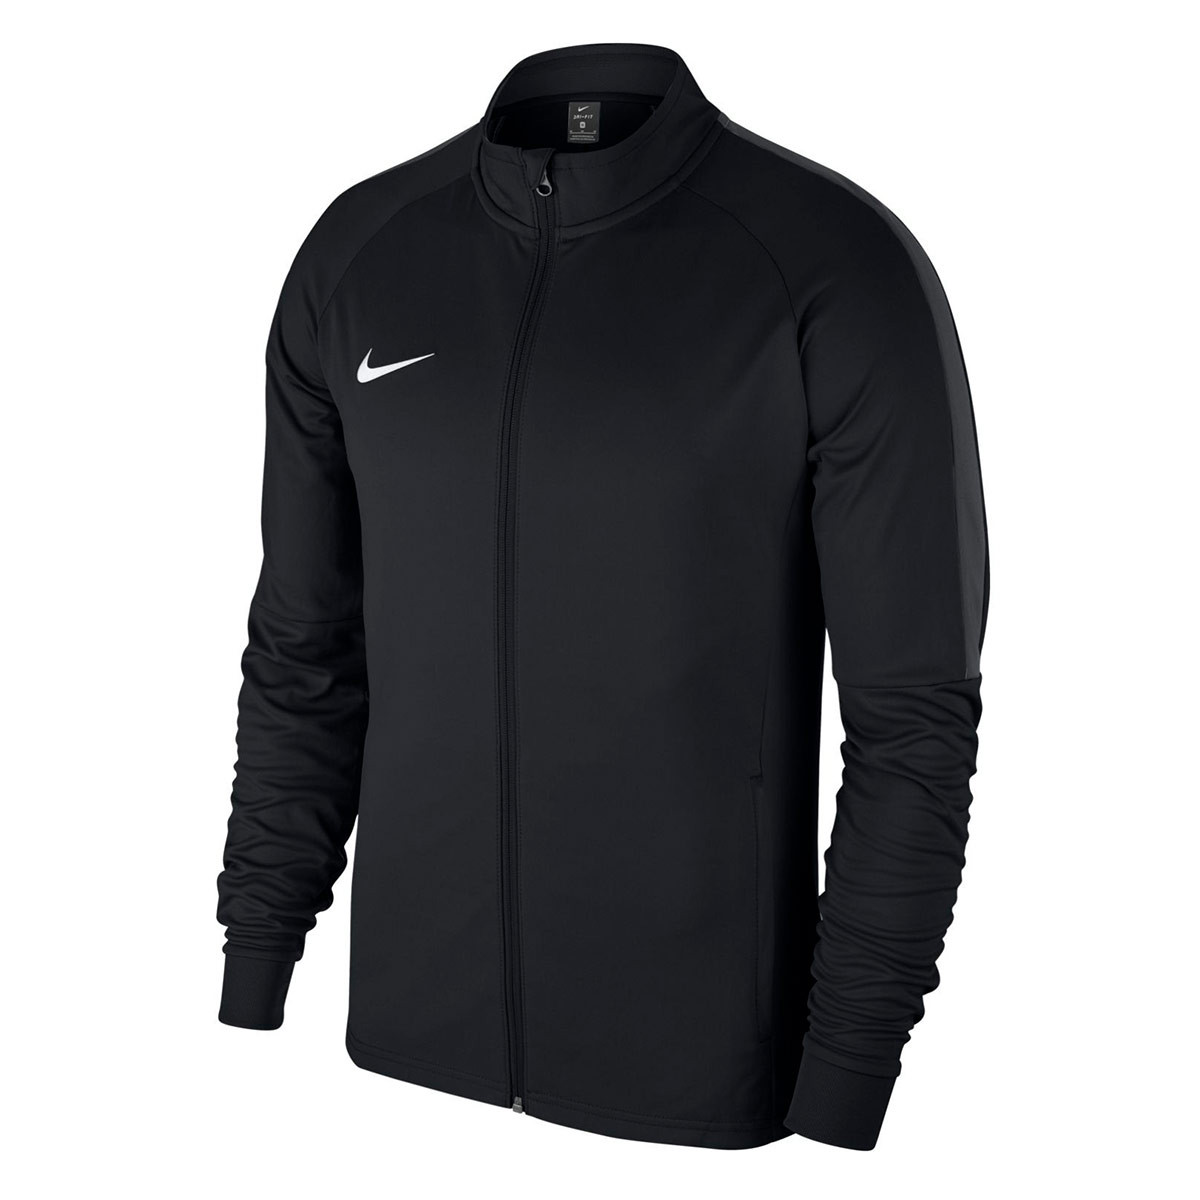 Chaqueta Nike Academy 18 Knit Black-Anthracite-White - Tienda de fútbol  Fútbol Emotion